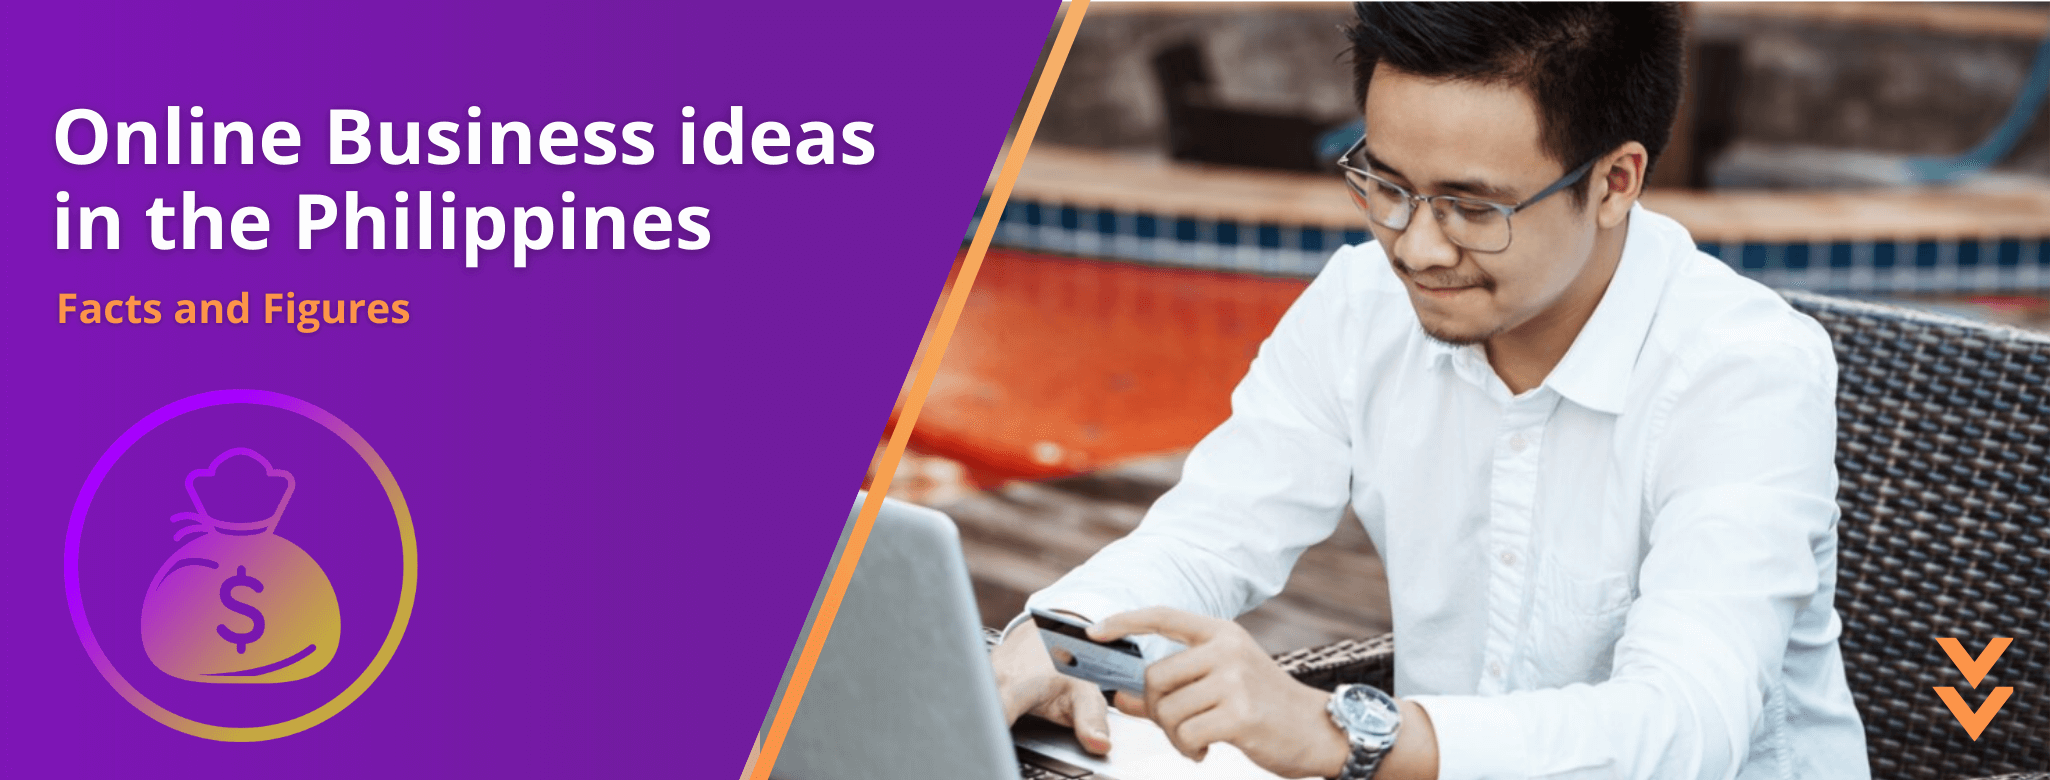 Online Business Ideas Philippines